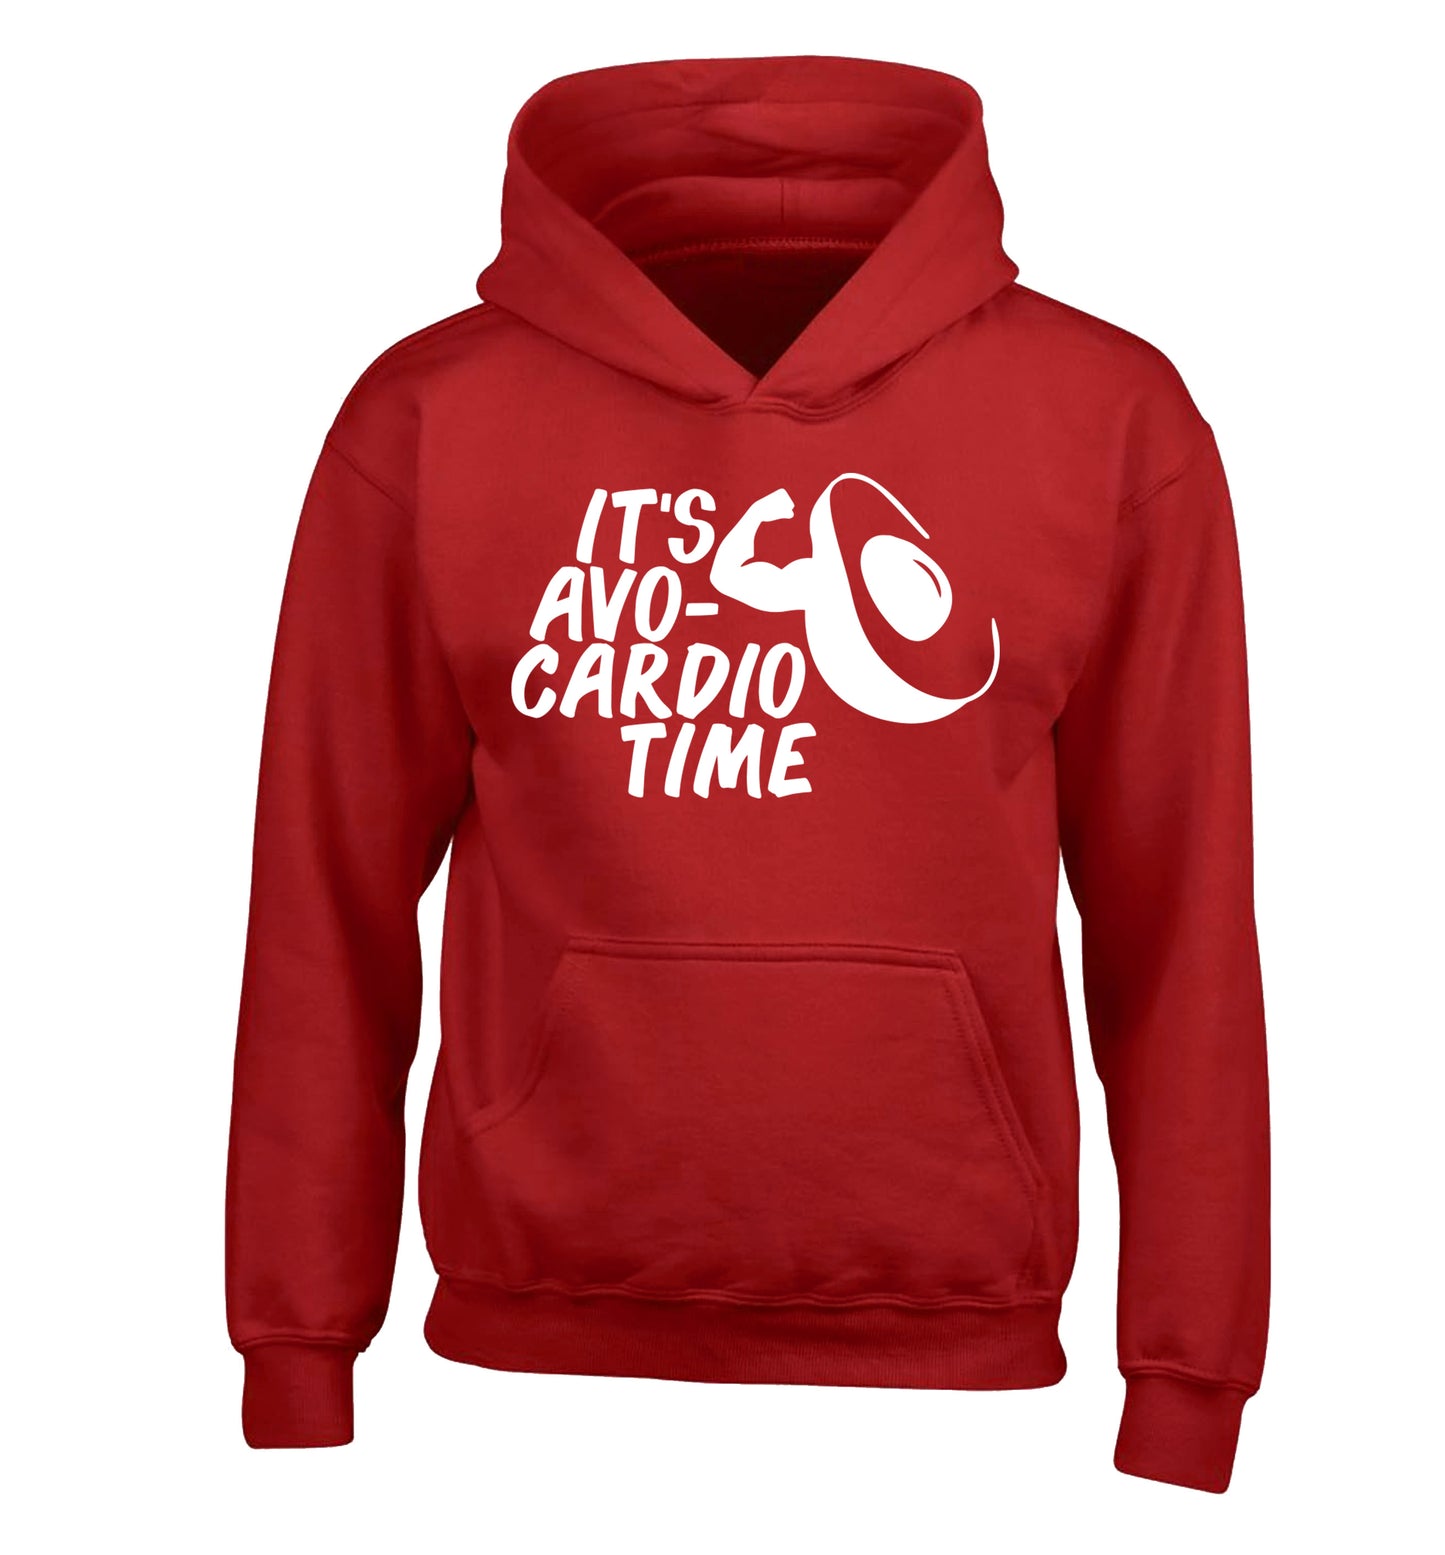 It's avo-cardio time children's red hoodie 12-14 Years